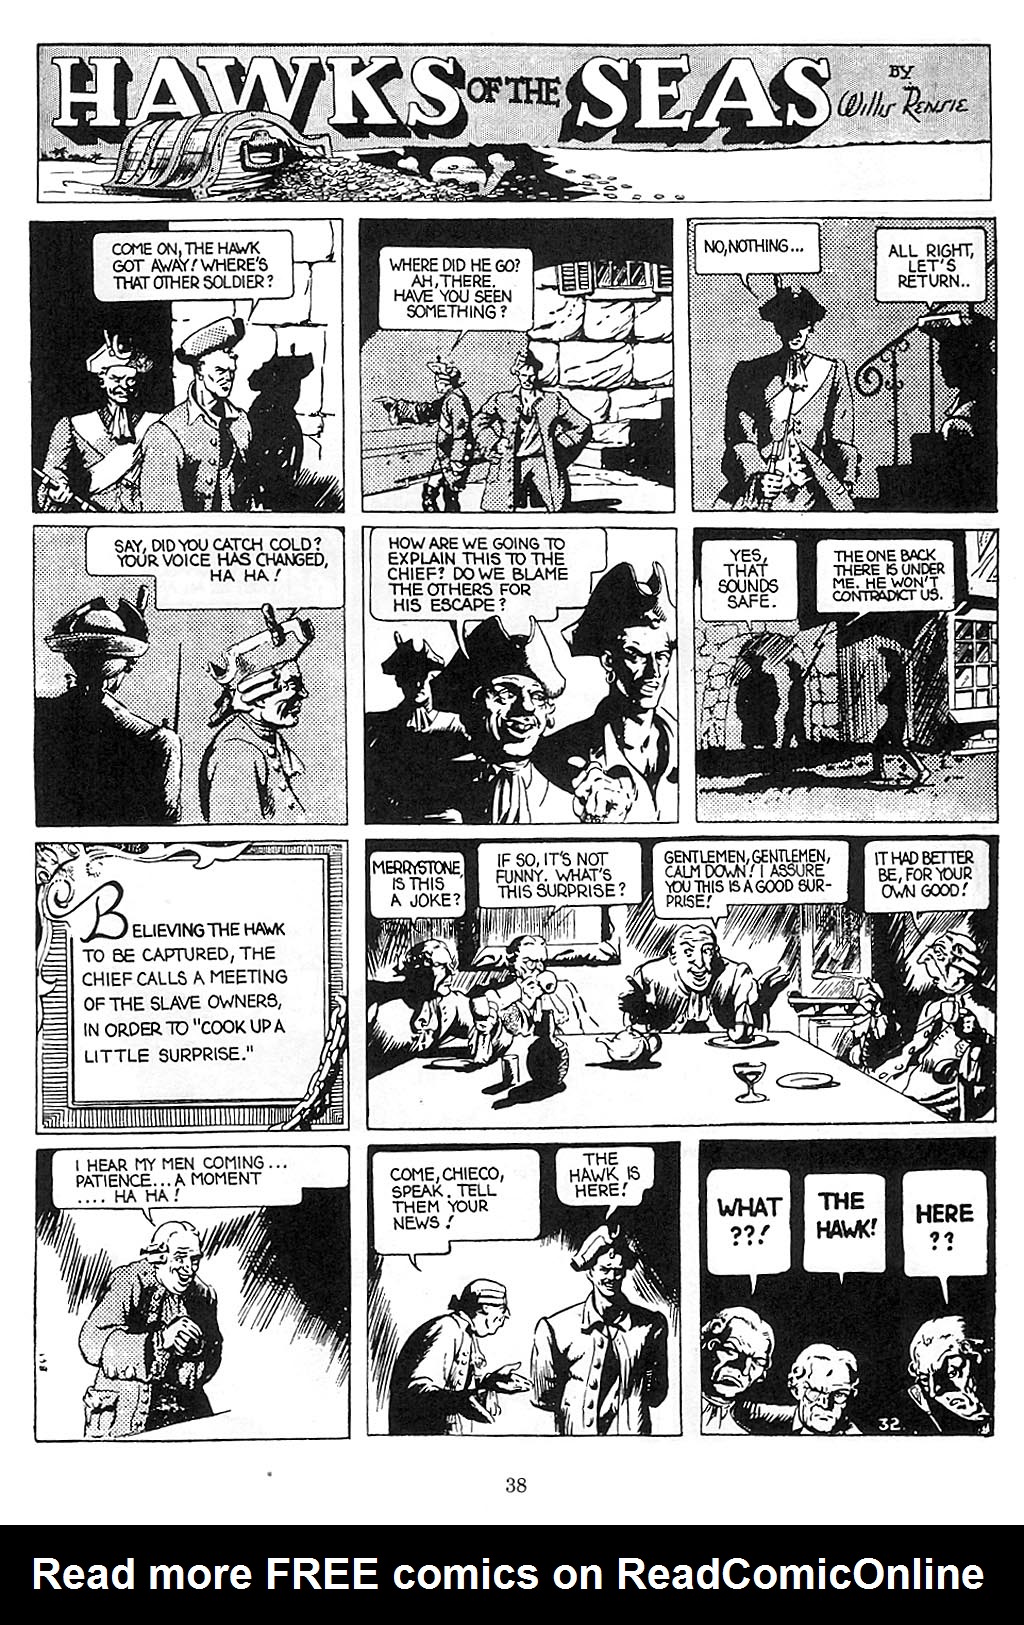 Read online Will Eisner's Hawks of the Seas comic -  Issue # TPB - 39